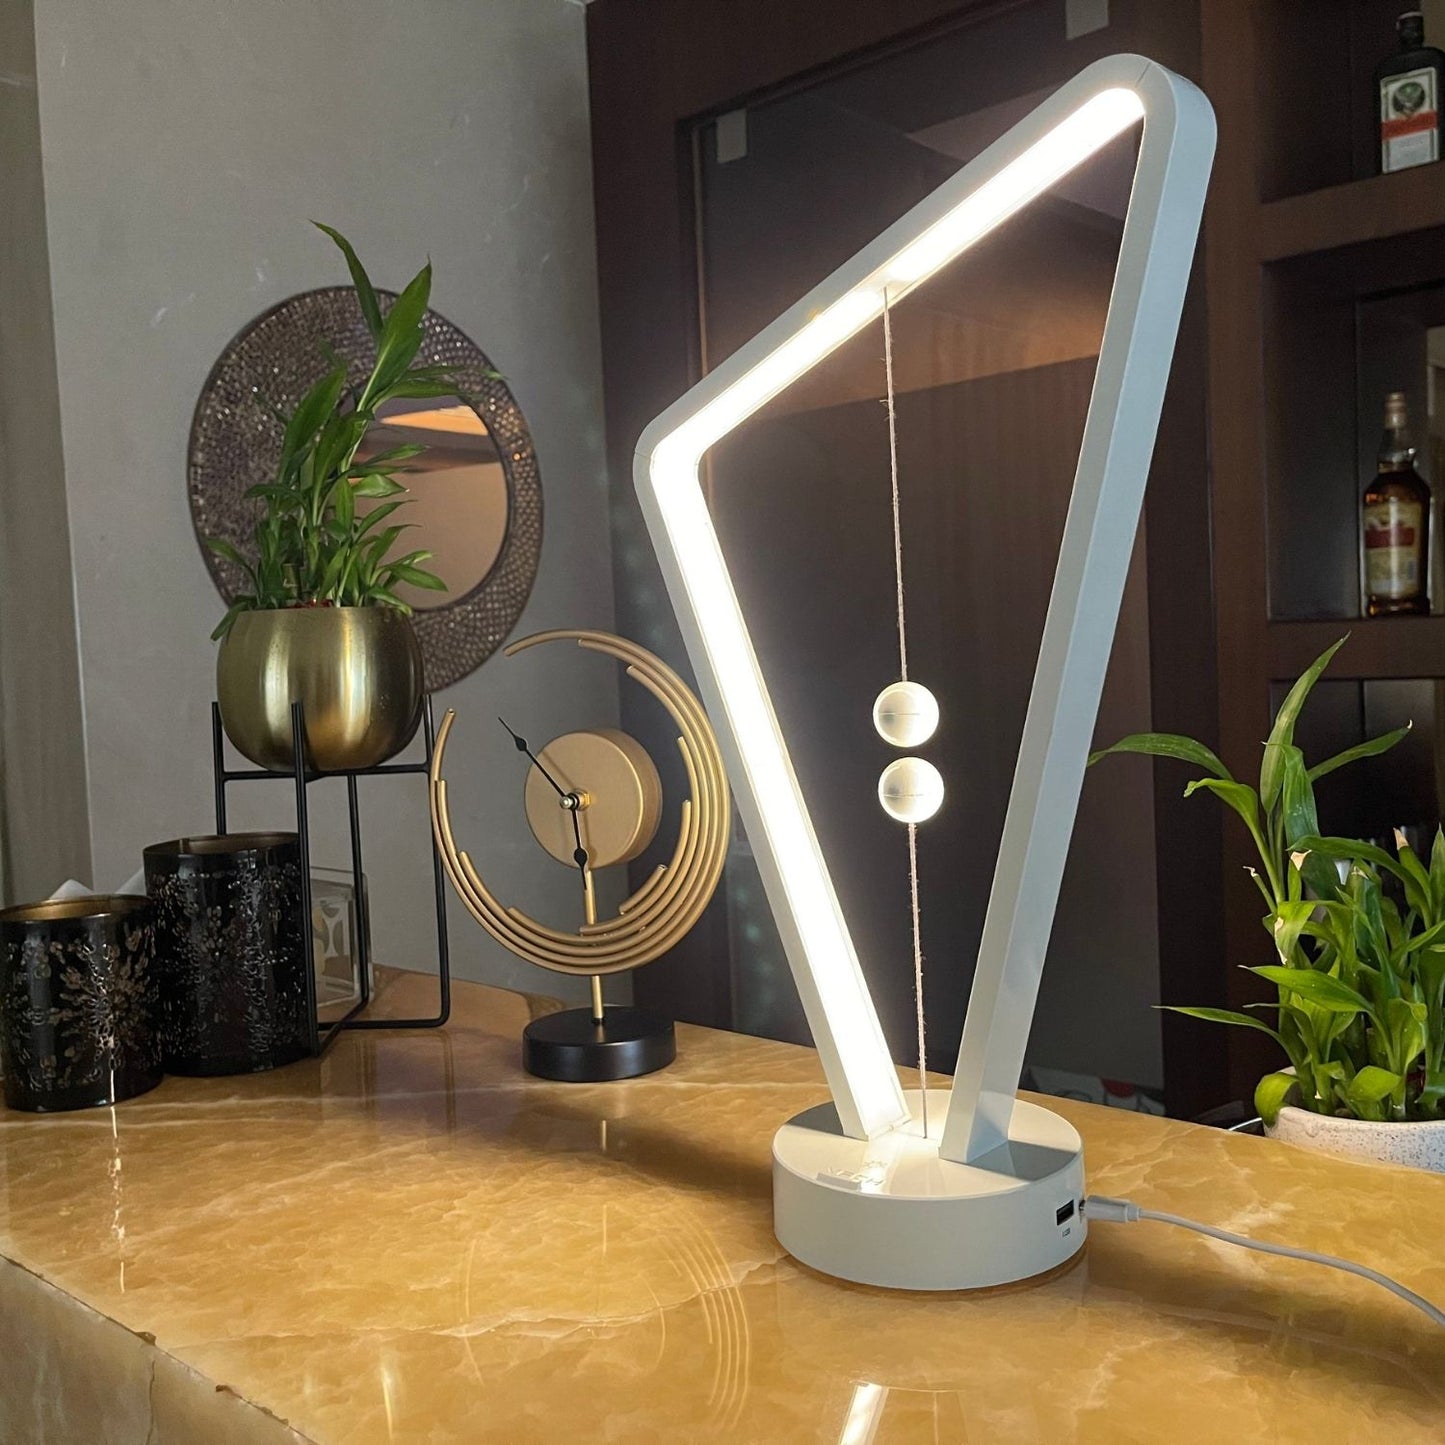 Anti Gravity Futuristic LED Lamp Triangle 3 Sided Lampshade Yellow Light Beautiful Home Decor Options